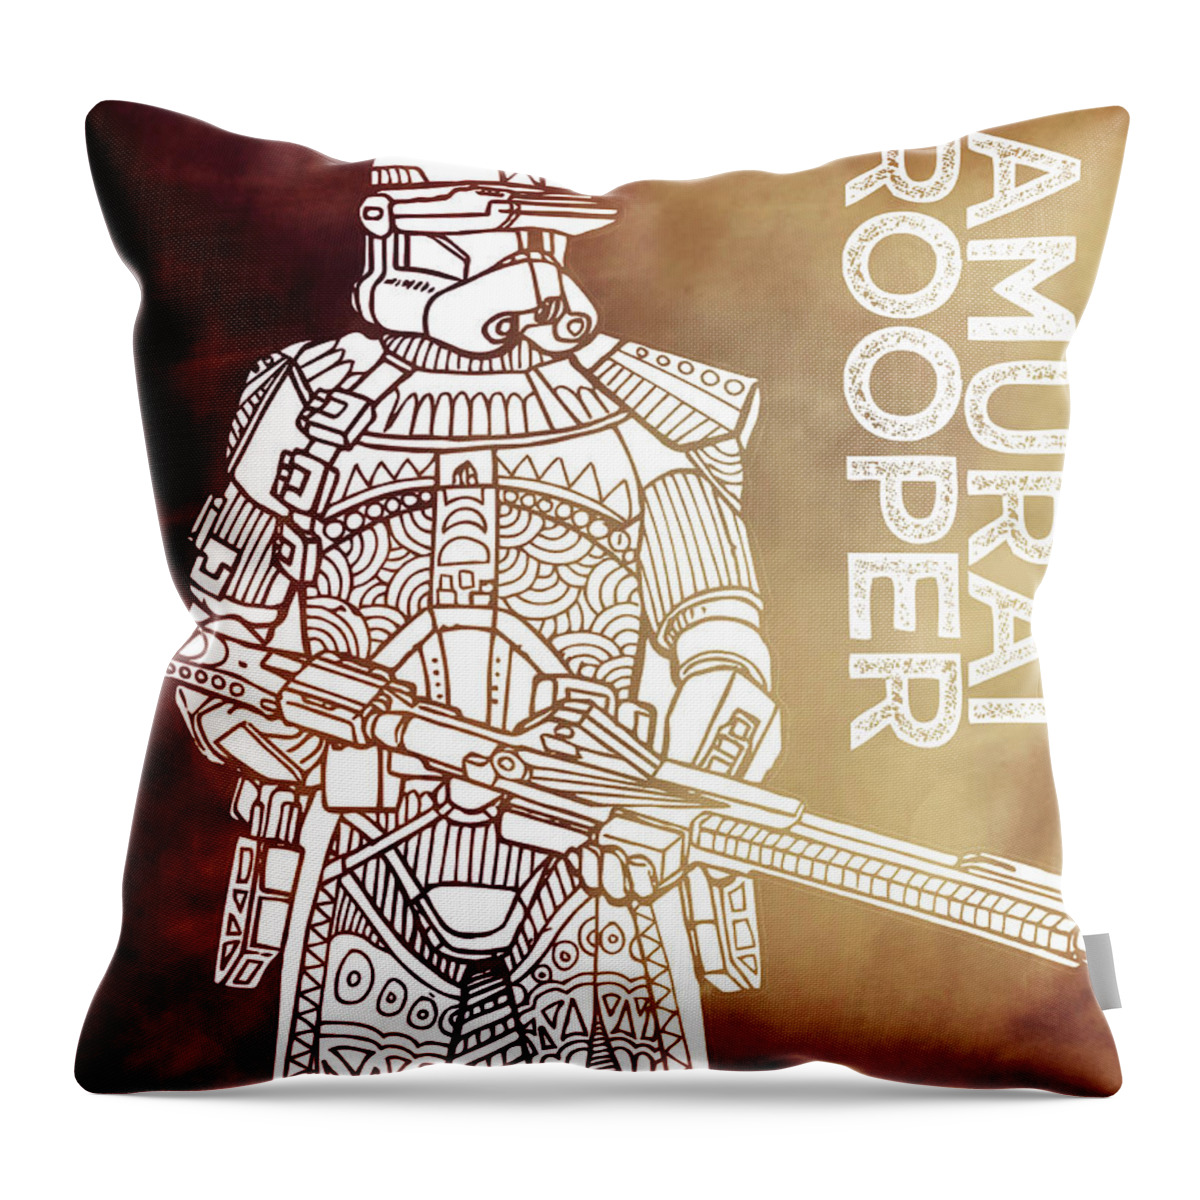 Stormtrooper Throw Pillow featuring the mixed media Stormtrooper - Star Wars Art - Brown by Studio Grafiikka